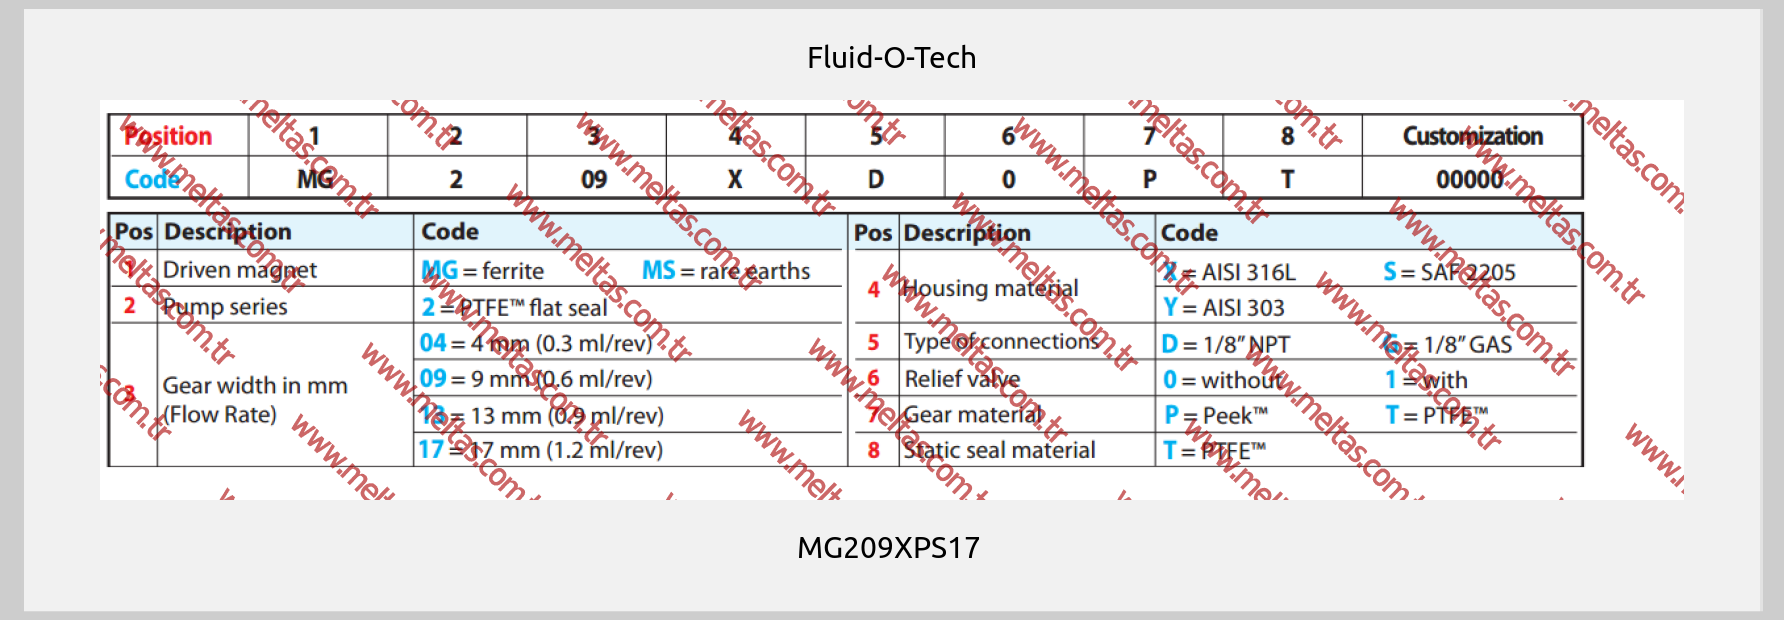 Fluid-O-Tech - MG209XPS17 